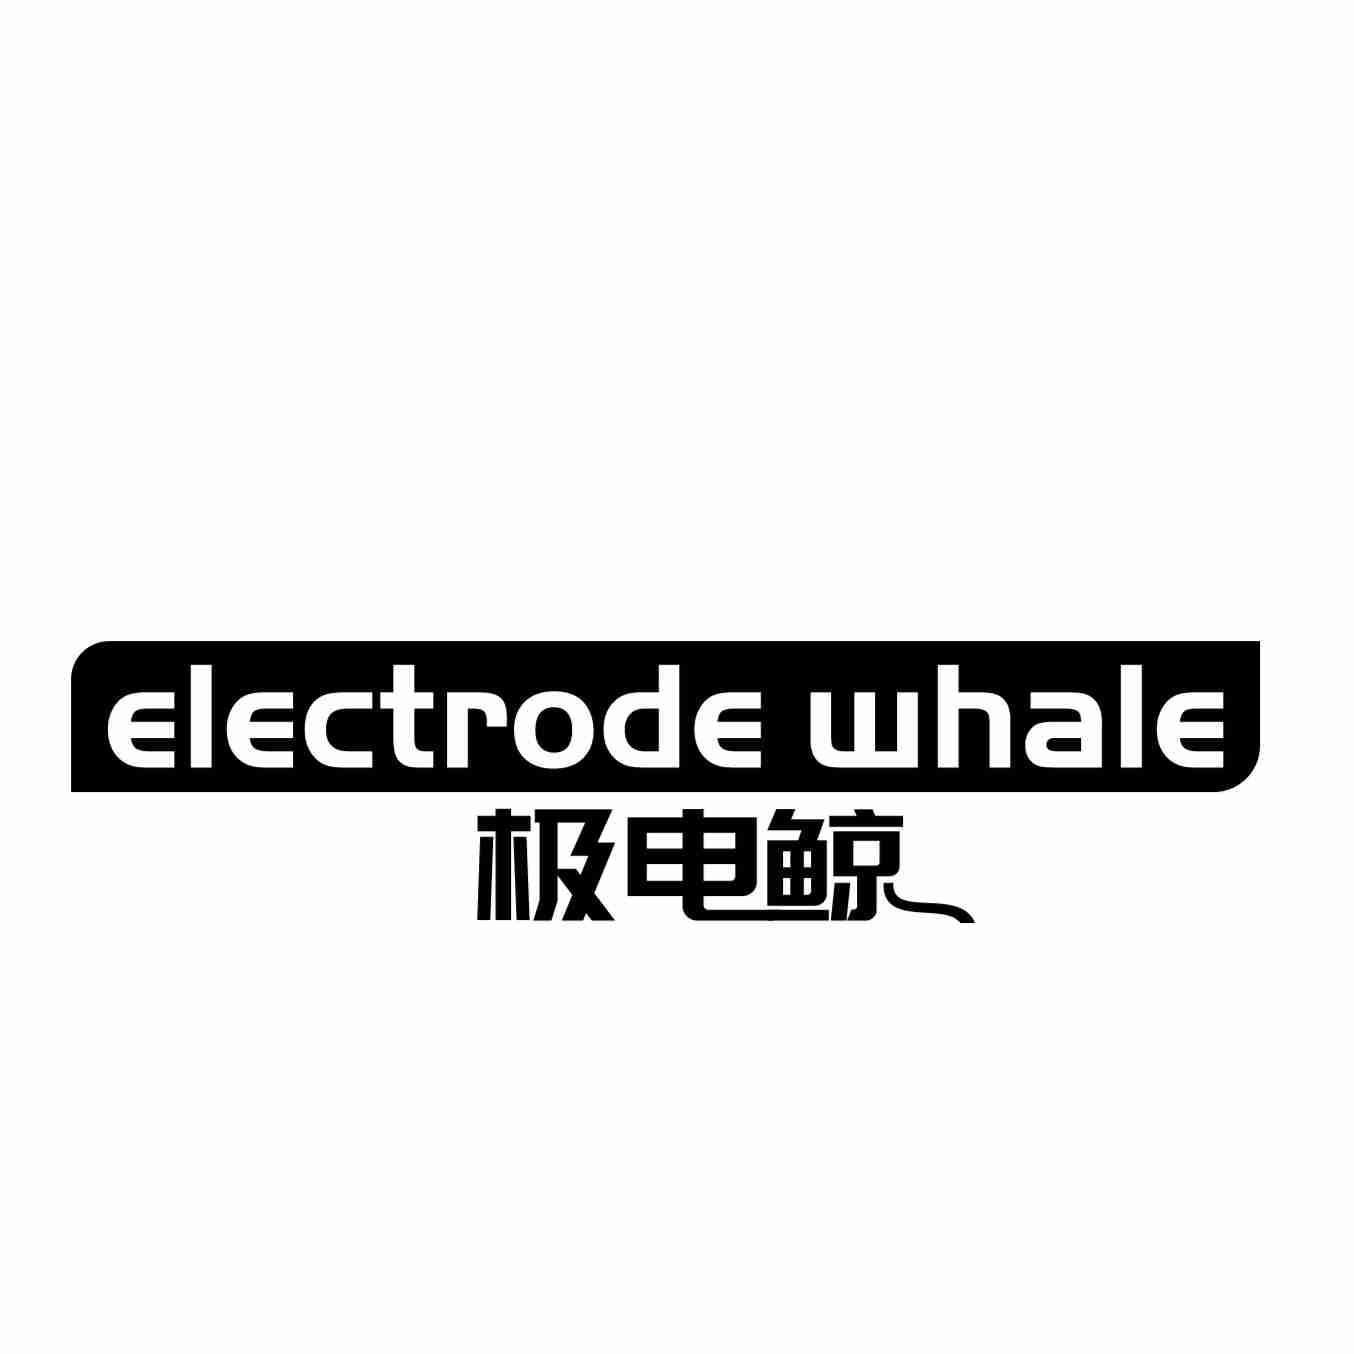 ELECTRODE WHALE 极电鲸